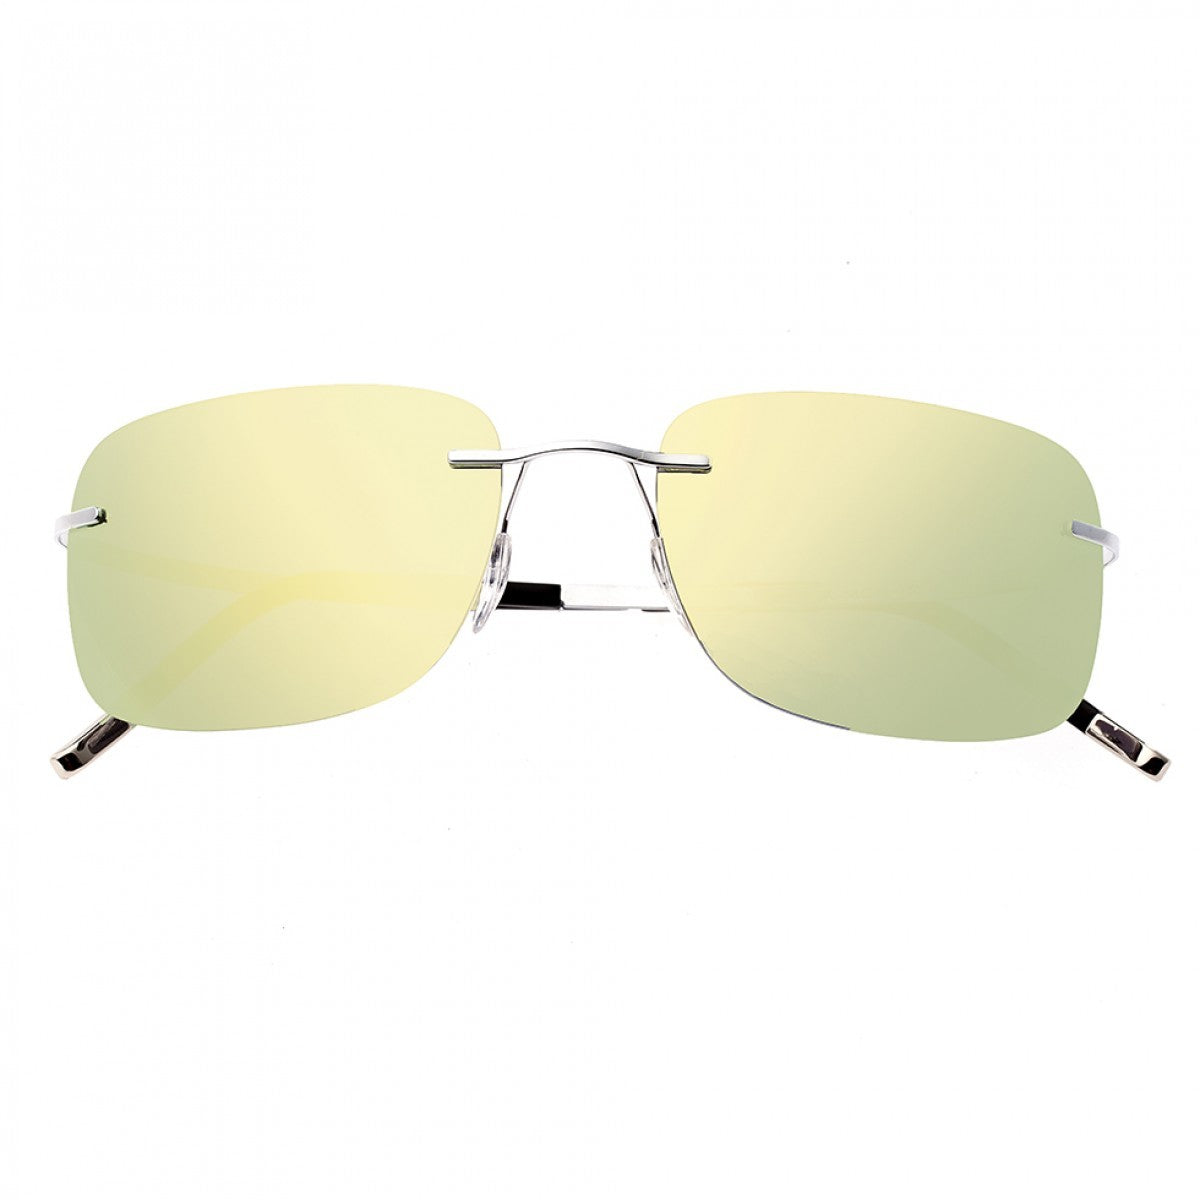 Breed Orbit Titanium Polarized Sunglasses - Silver/Yellow - BSG042SL